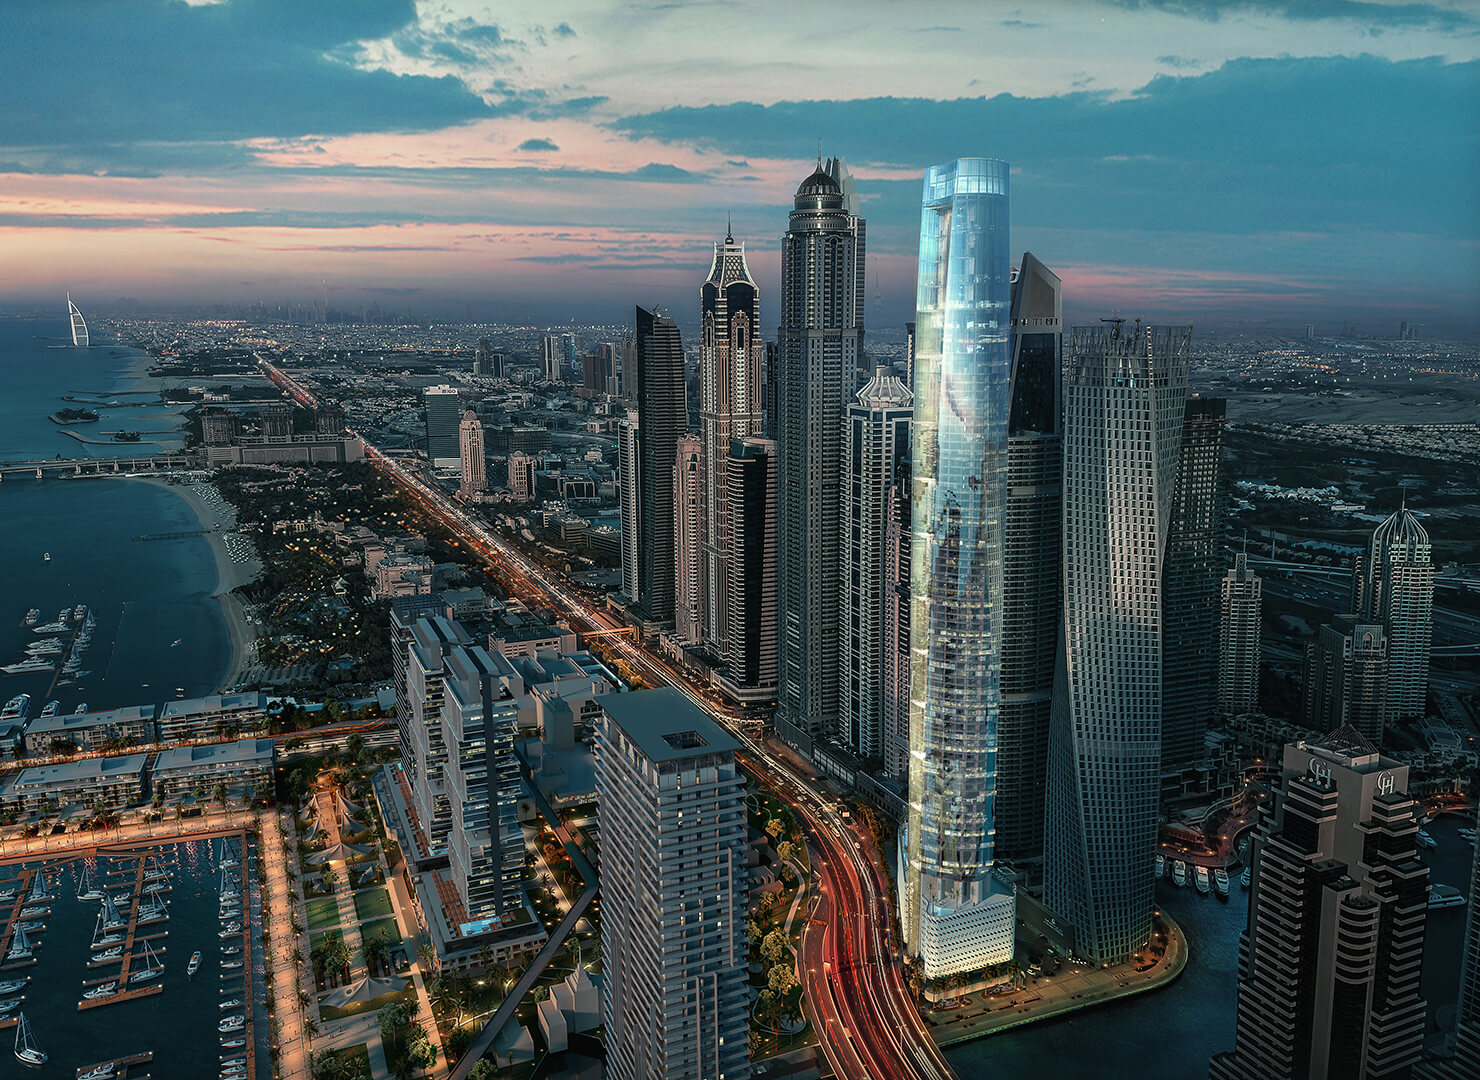 Ciel Hotel - Limitless Valley - Real Estate - Dubai